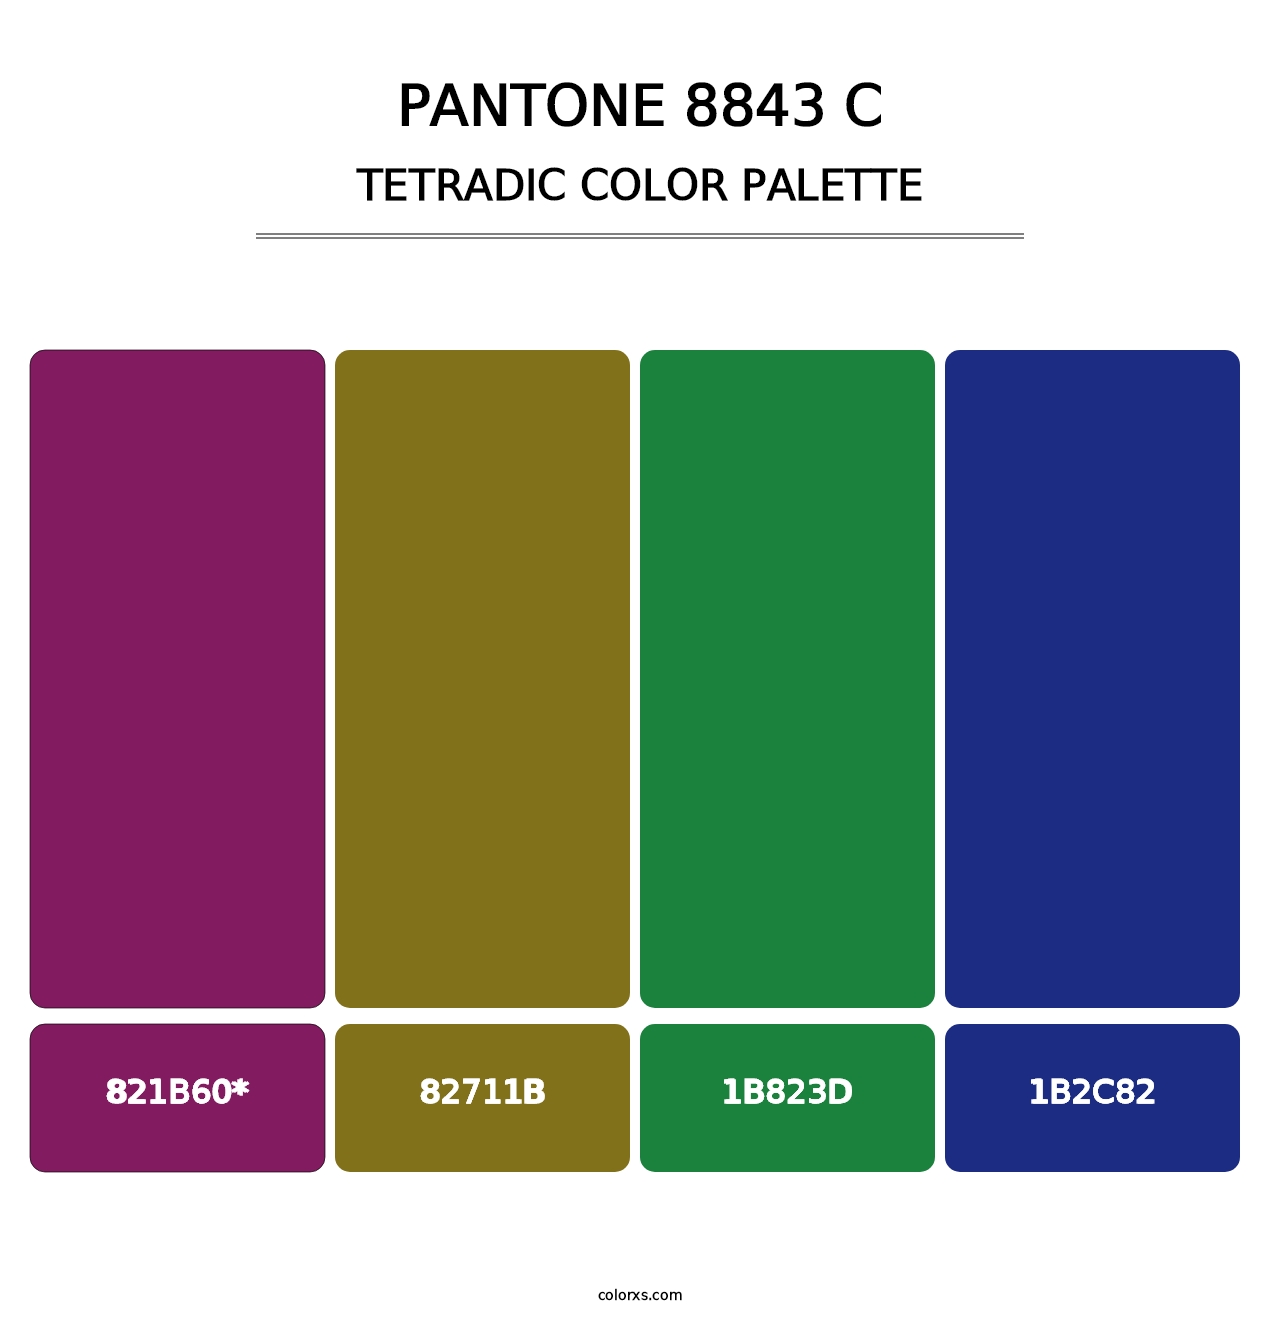 PANTONE 8843 C - Tetradic Color Palette